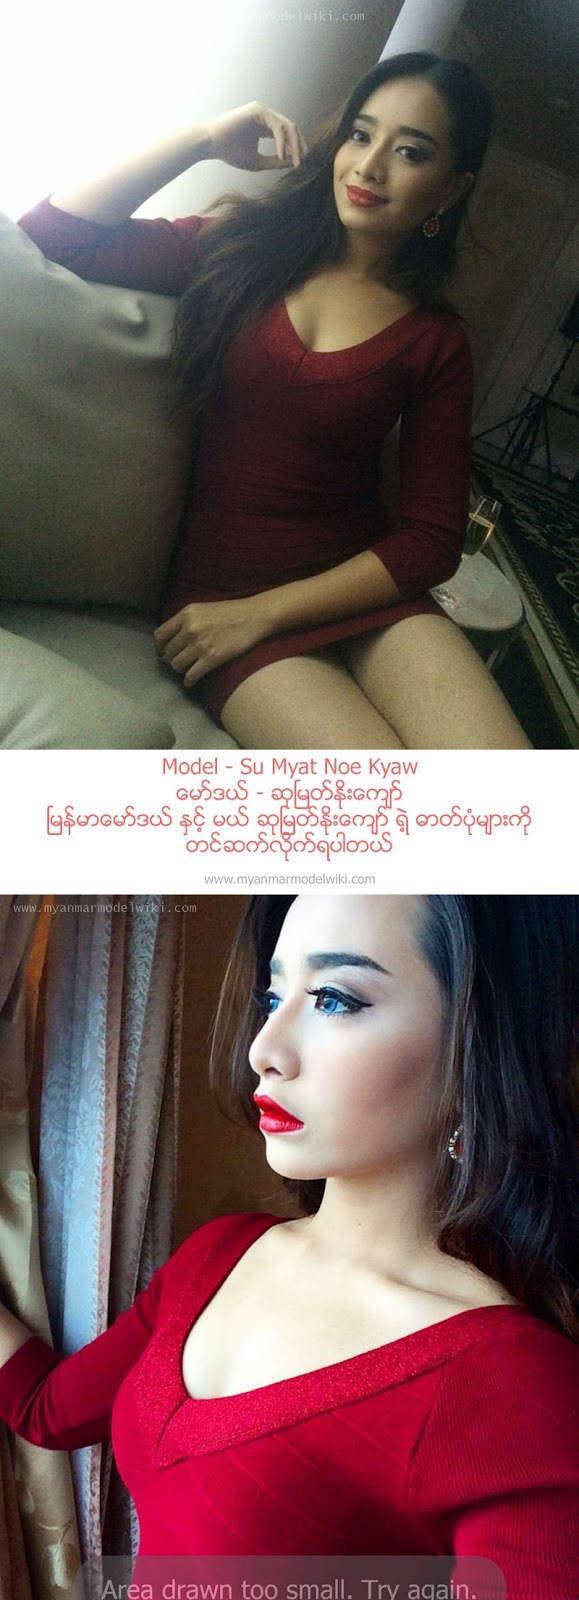 Myanmar Model Su Myat Noe Kyaw in Style On Instagram